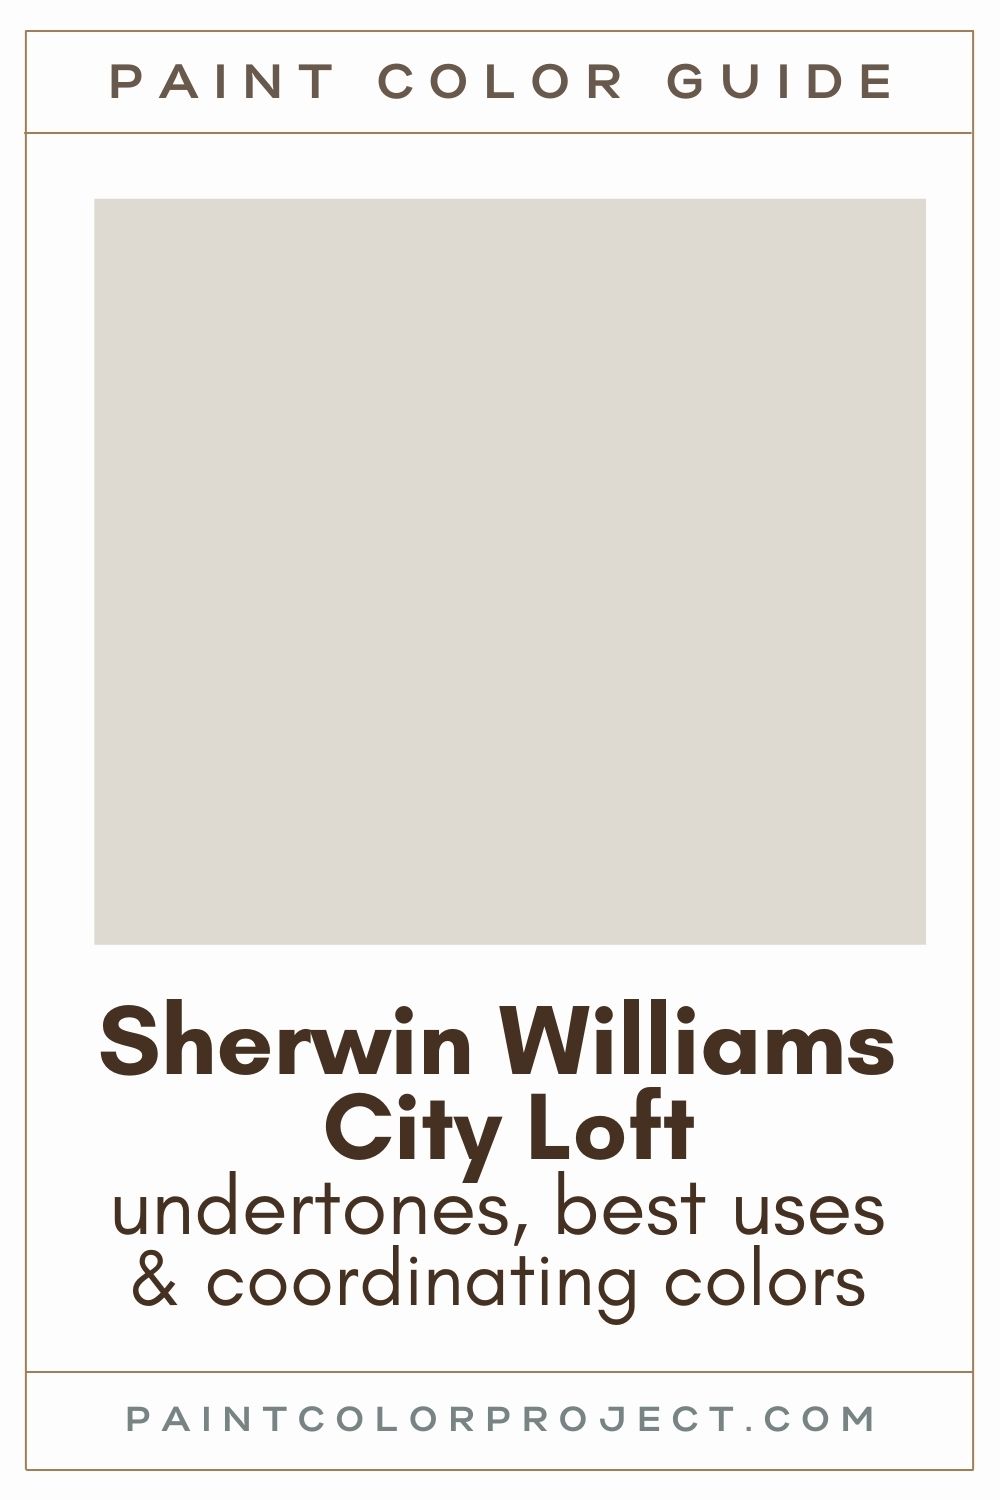 Sherwin Williams City Loft Paint Color Guide 